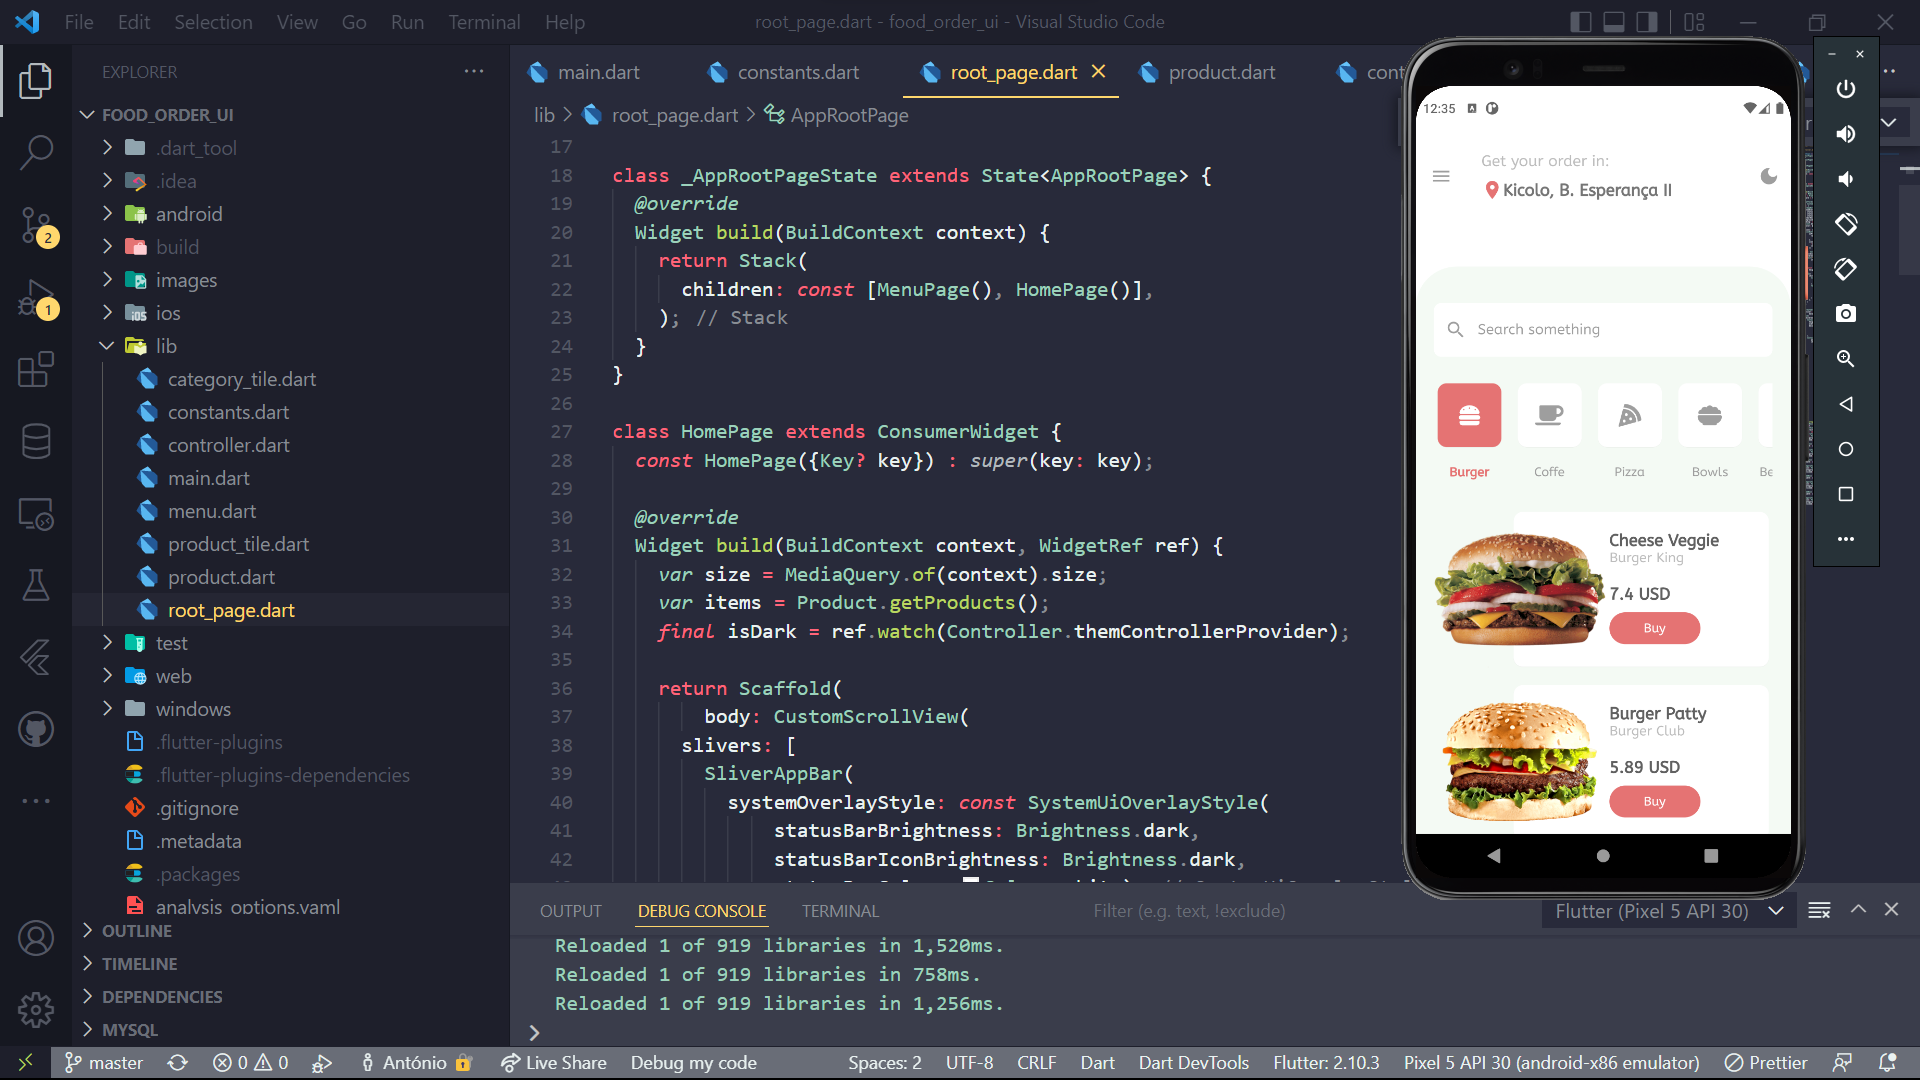 Food Order App UI based on Tonmoy Sarkar design on Dribble